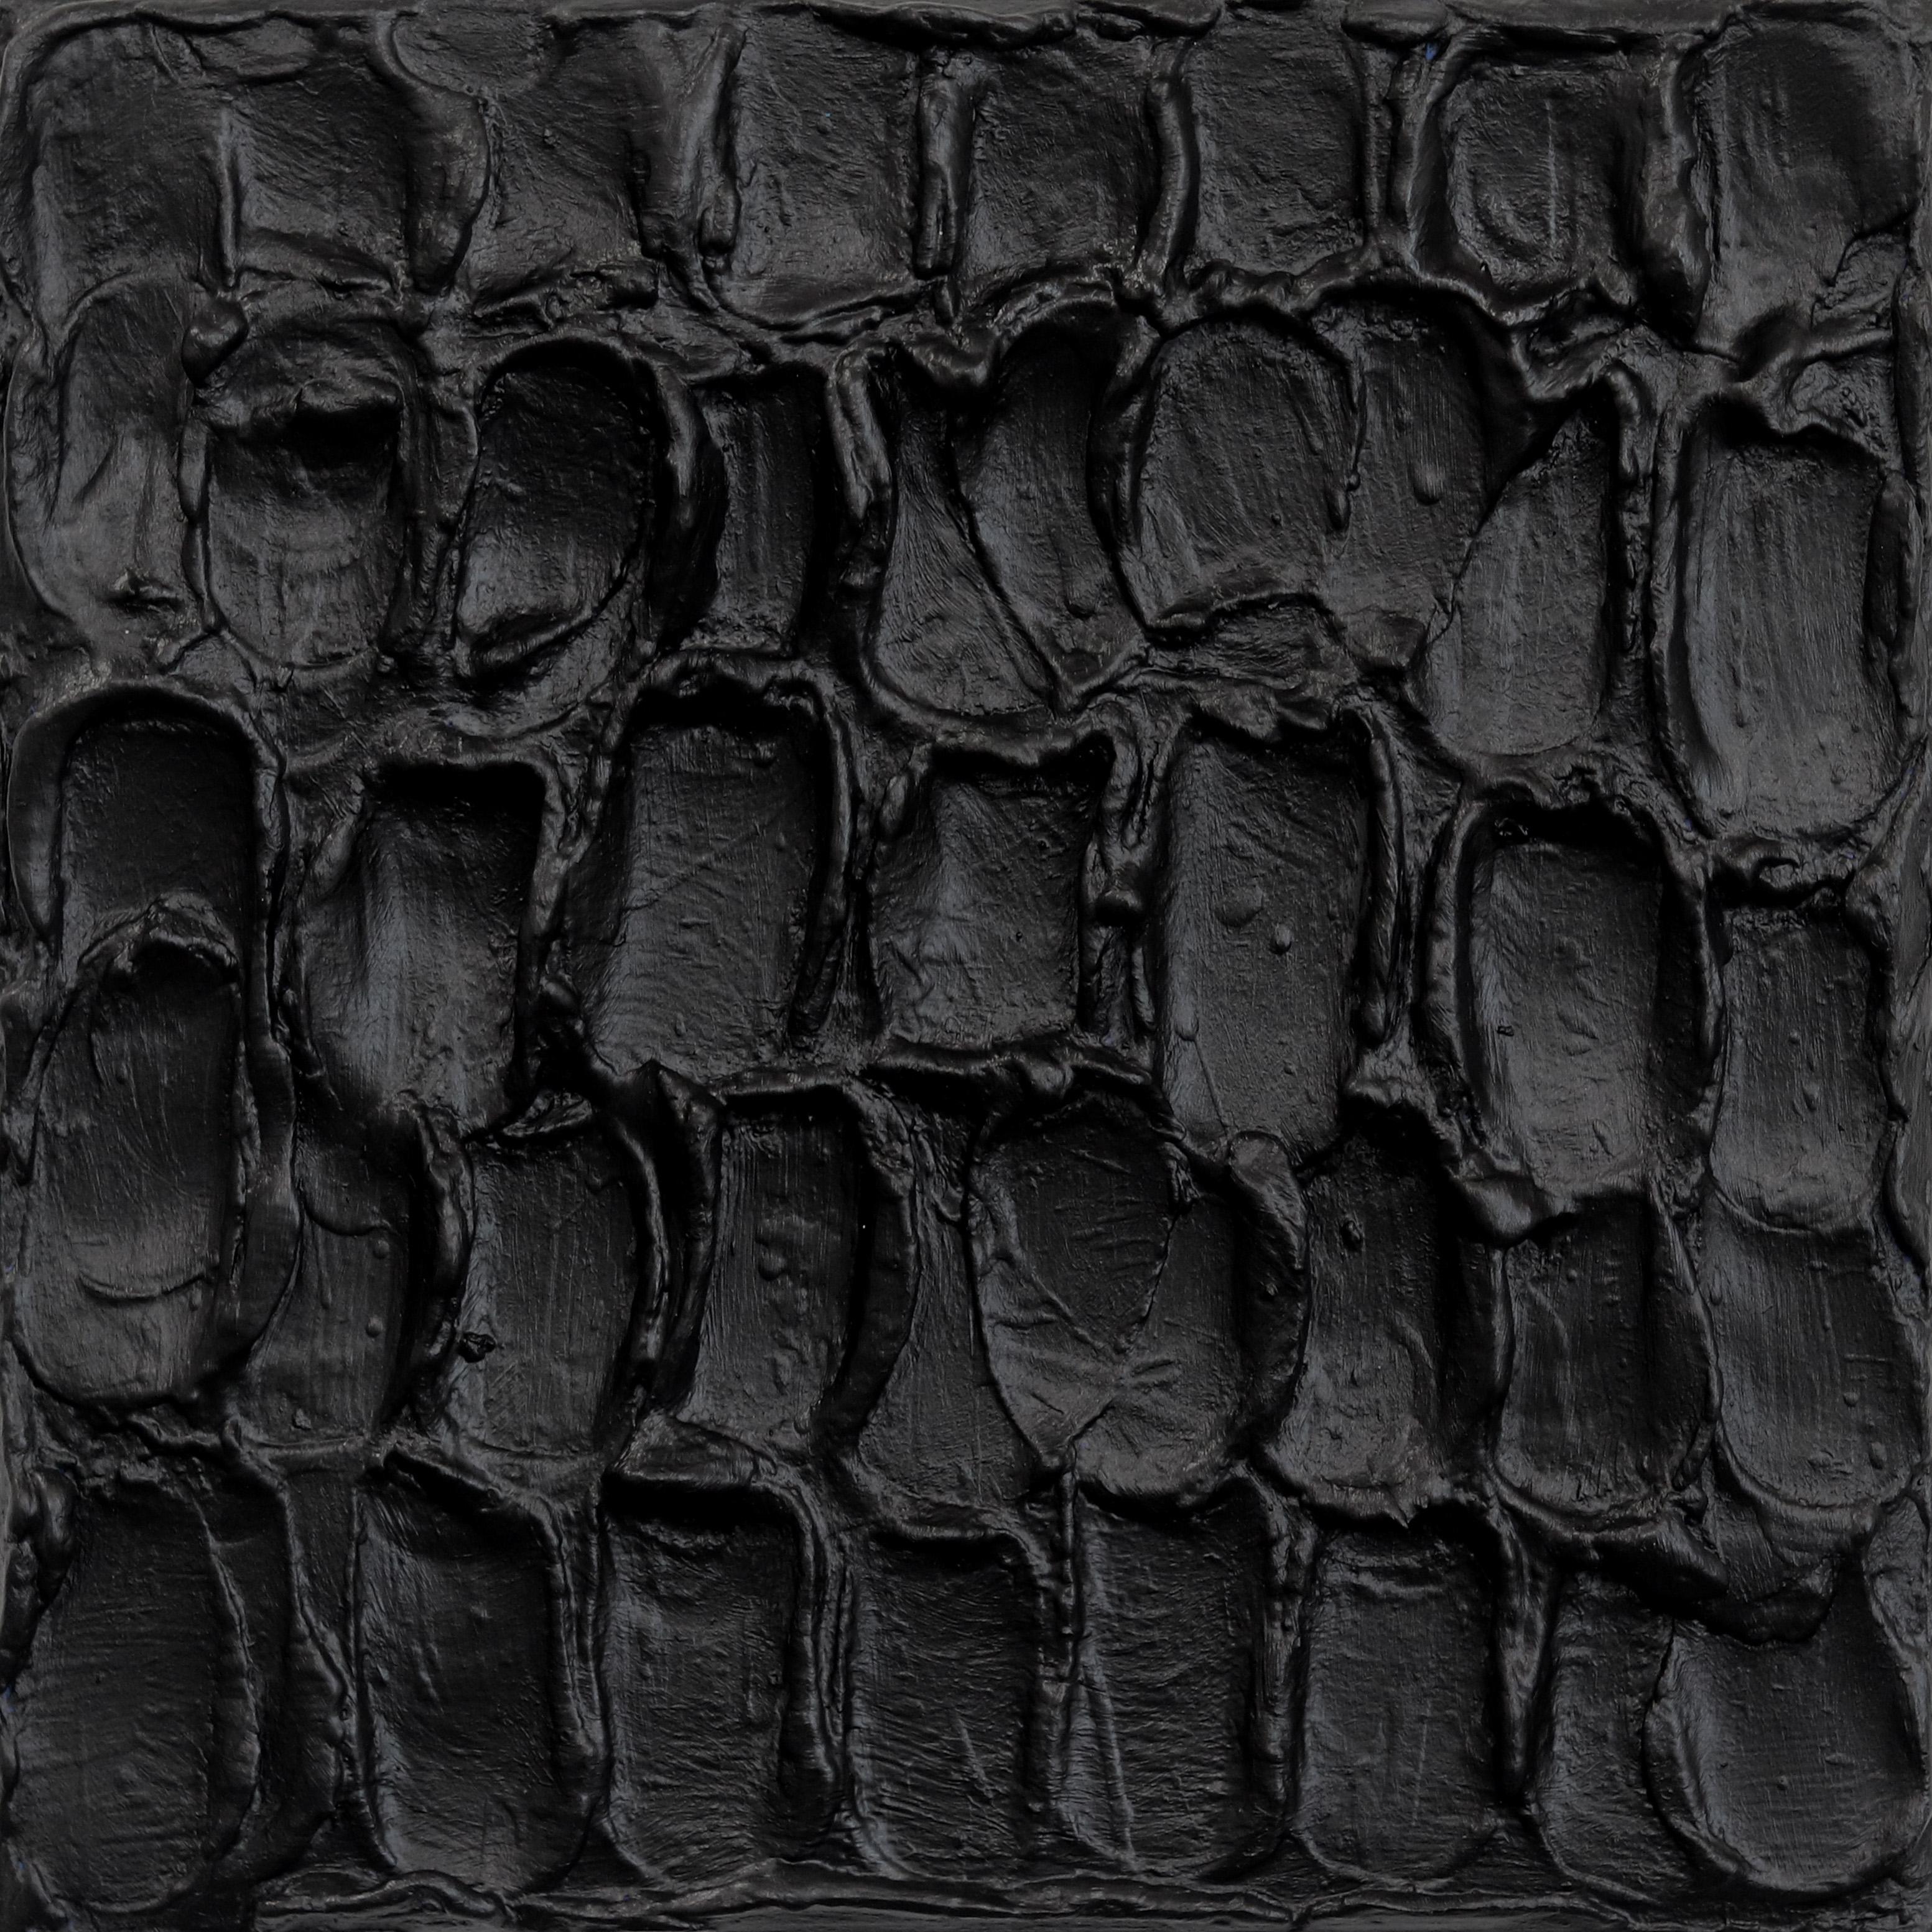 Len Klikunas Abstract Painting - Primitive Modern #3 - Black Textural Abstract Minimalist Artwork on Canvas